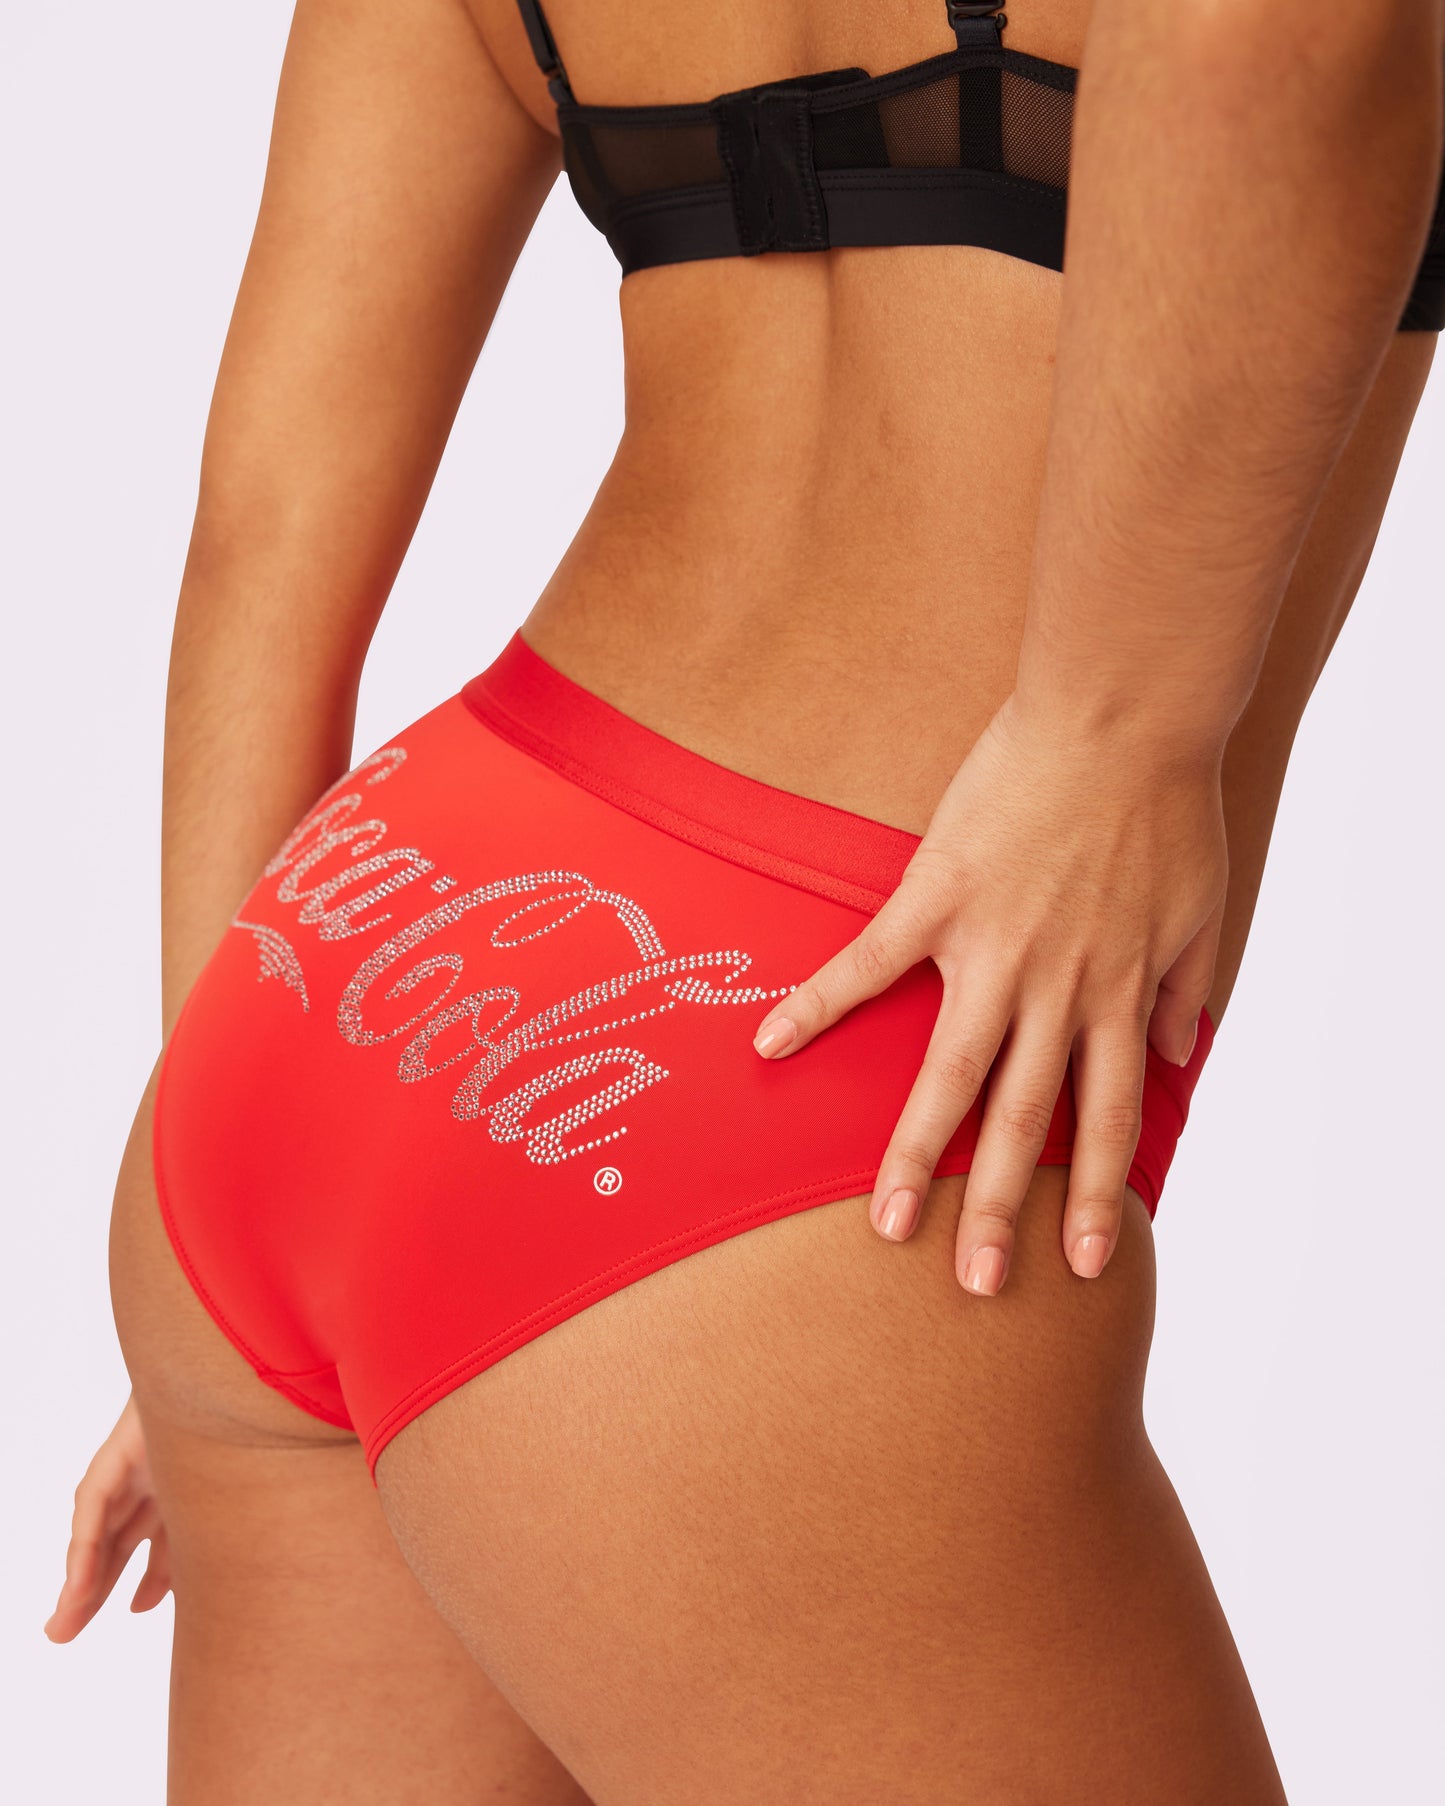 Special Edition Coca-Cola Dream Comfort Brief | Ultra-Soft Re:Play | Archive (Coca-Cola Bling)